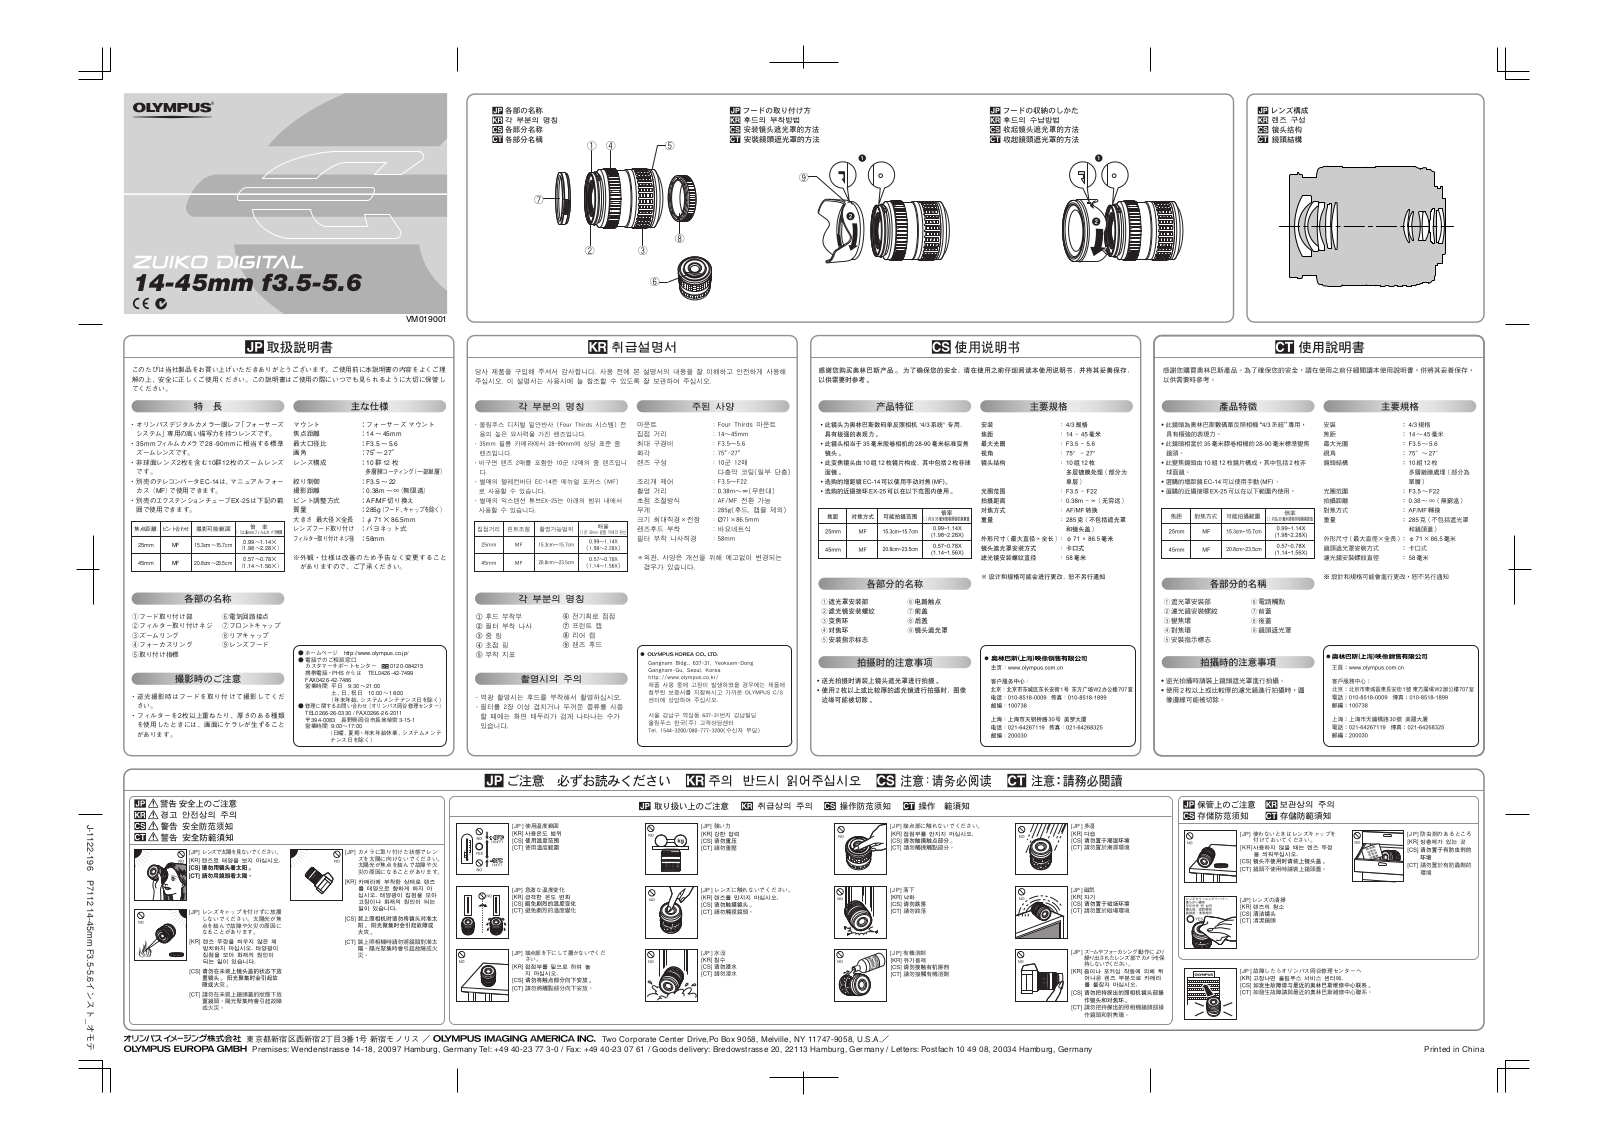 Olympus ZUIKO DIGITAL 14-45mm F3.5-5.6 Instruction Manual